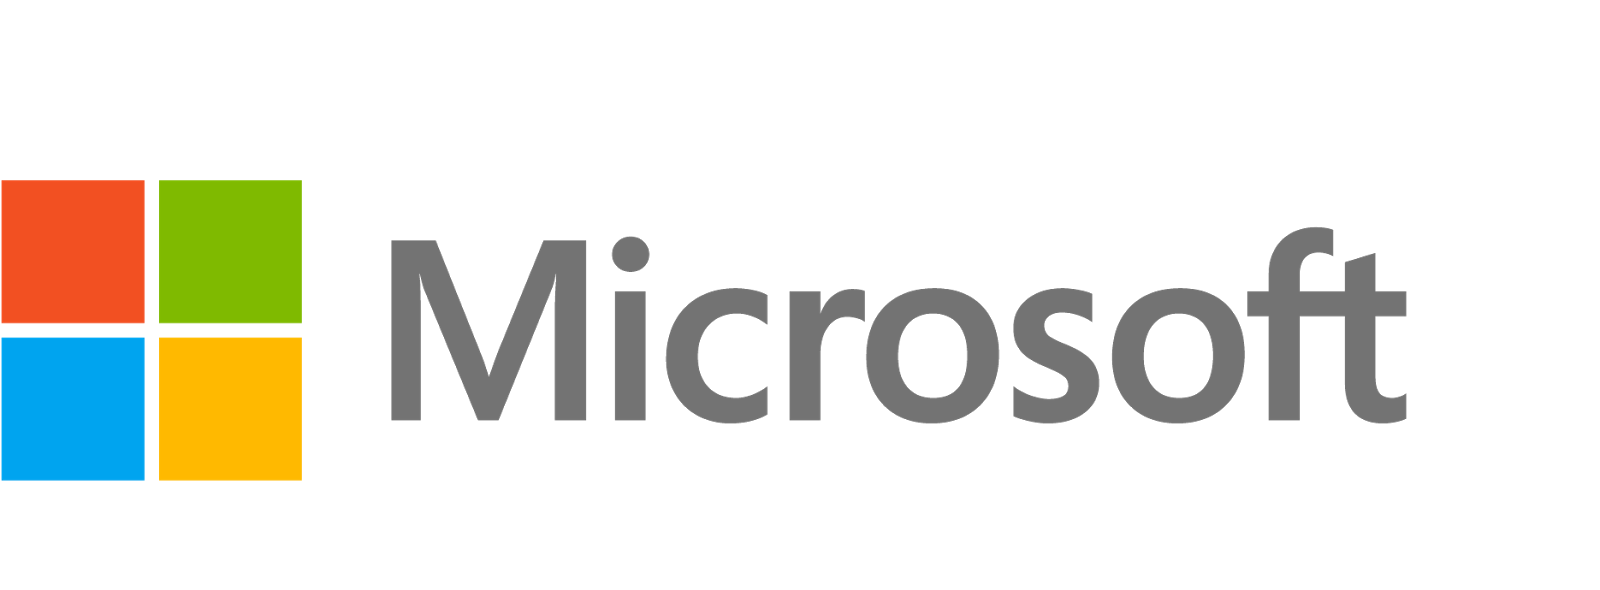 Microsoft Rewards Logo - Microsoft launching Microsoft's Rewards program 2017 in UK ~ State ...